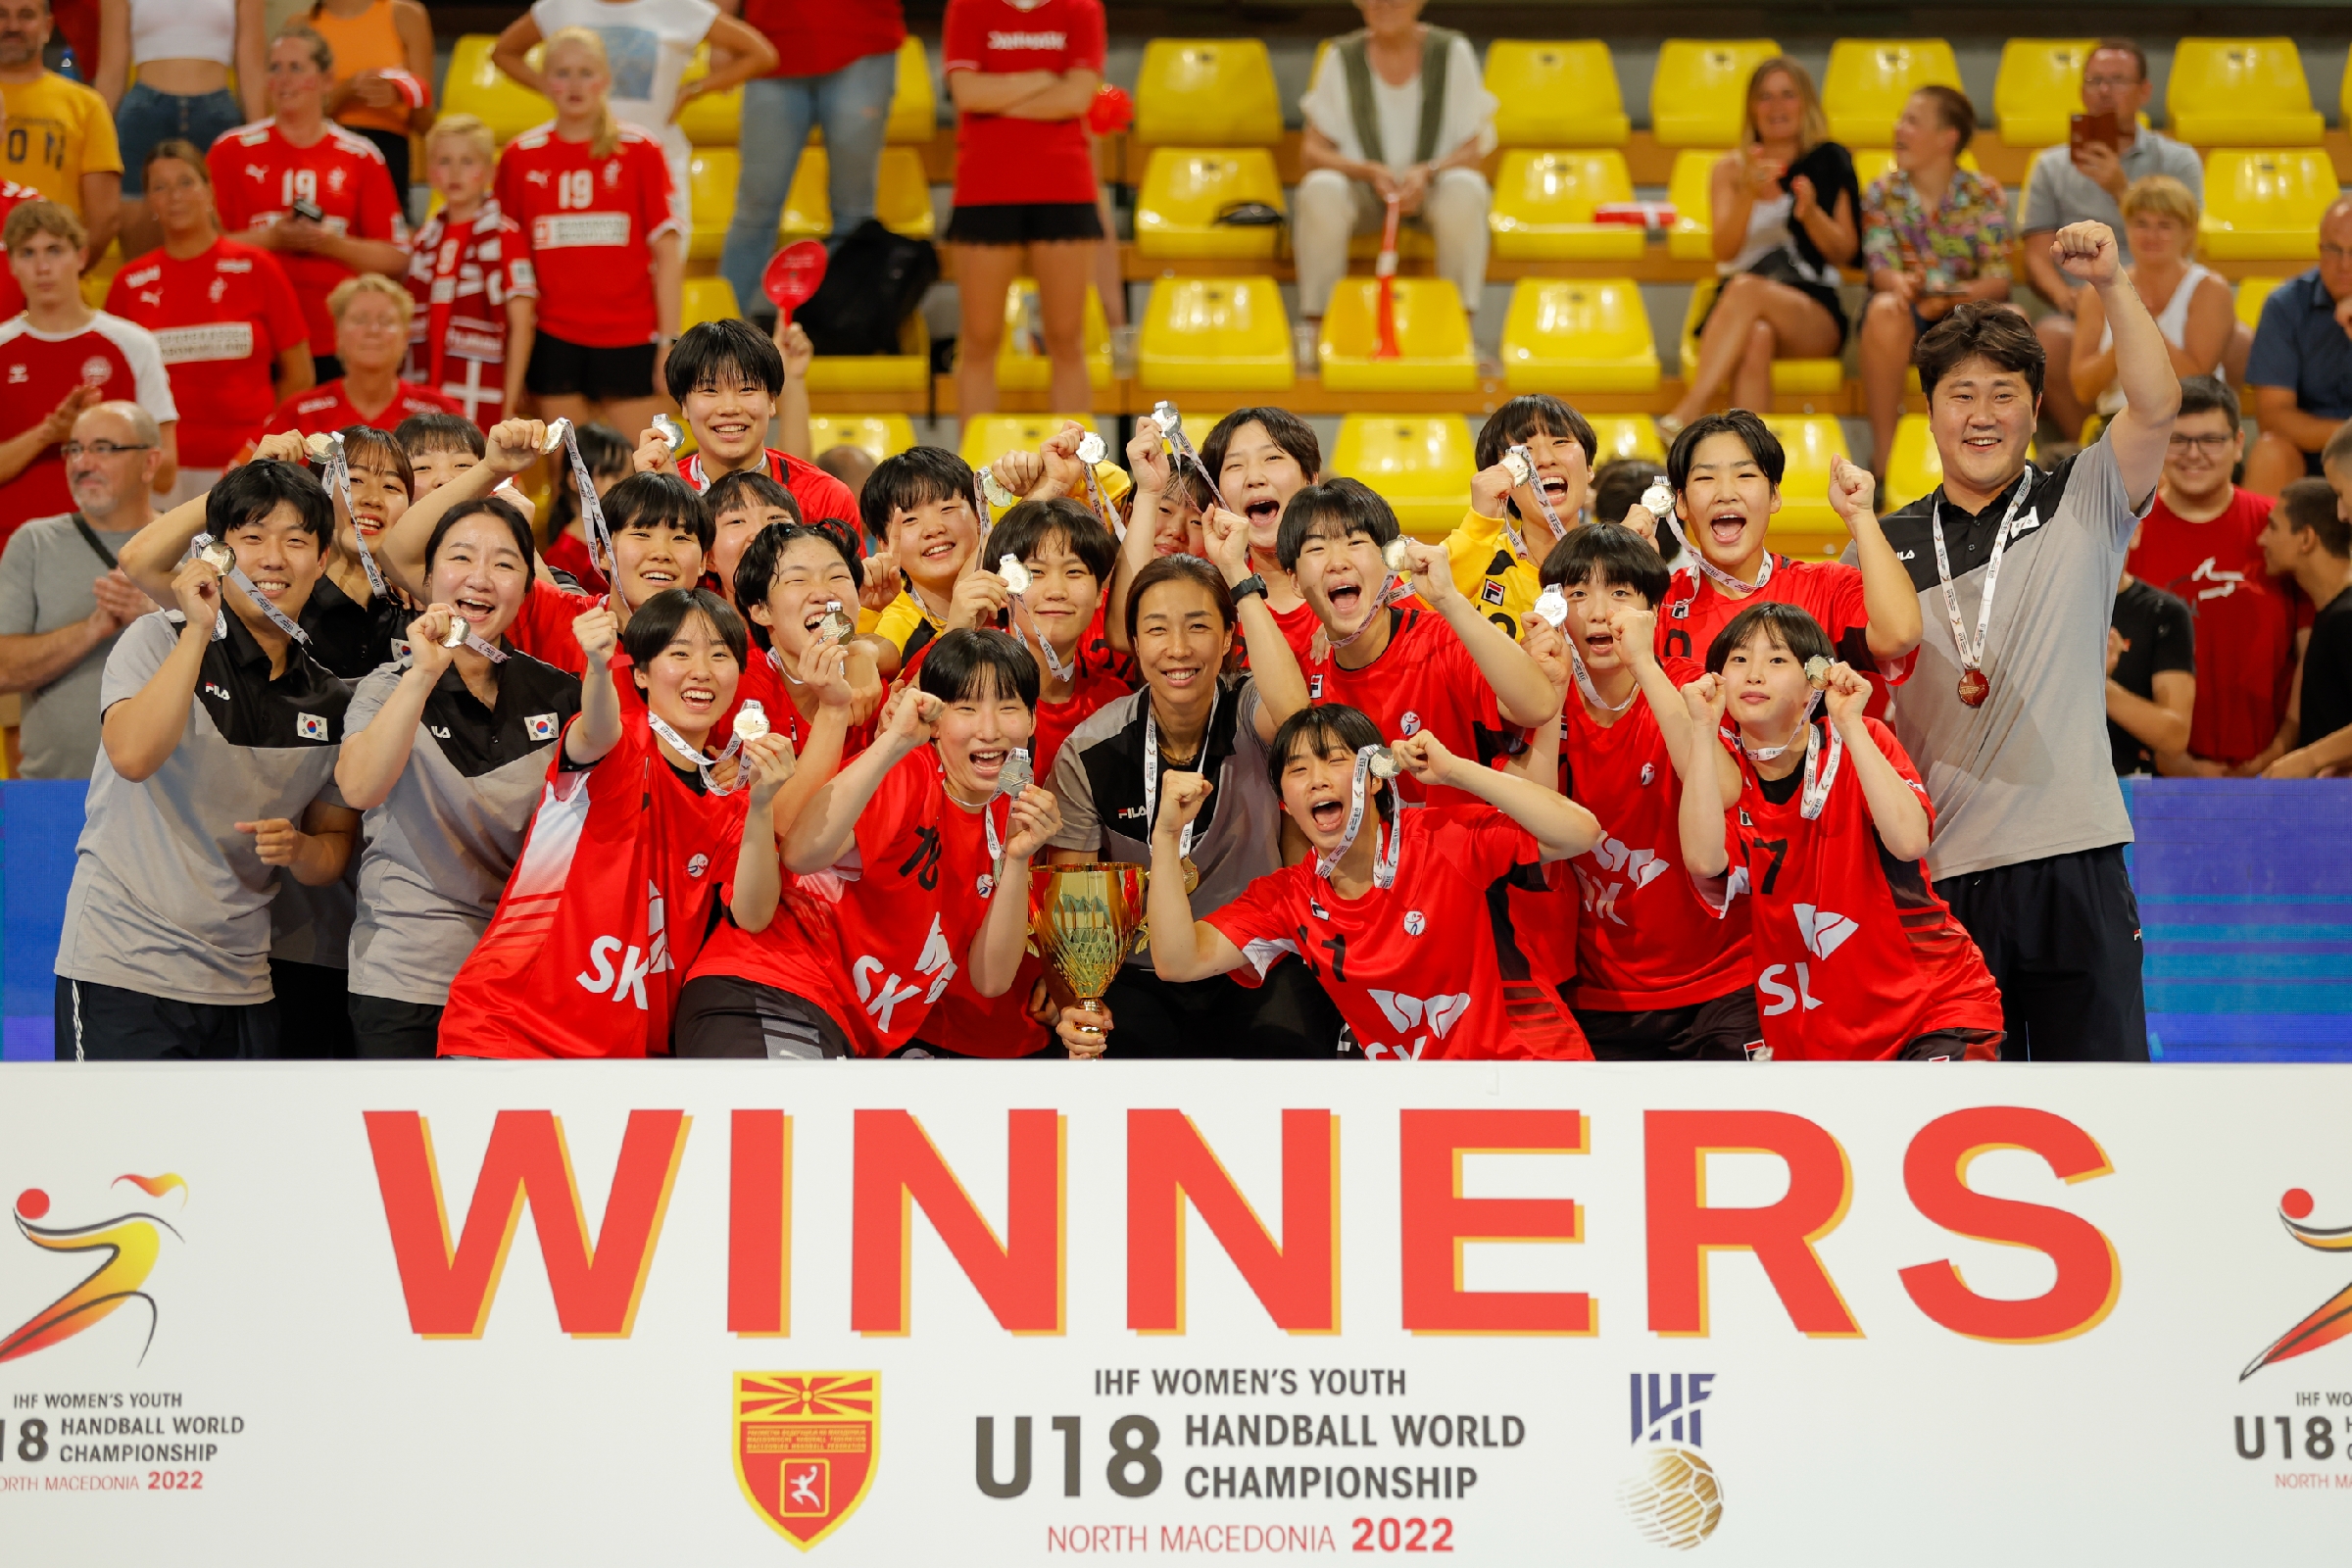 U20 Women's World Handball Championship